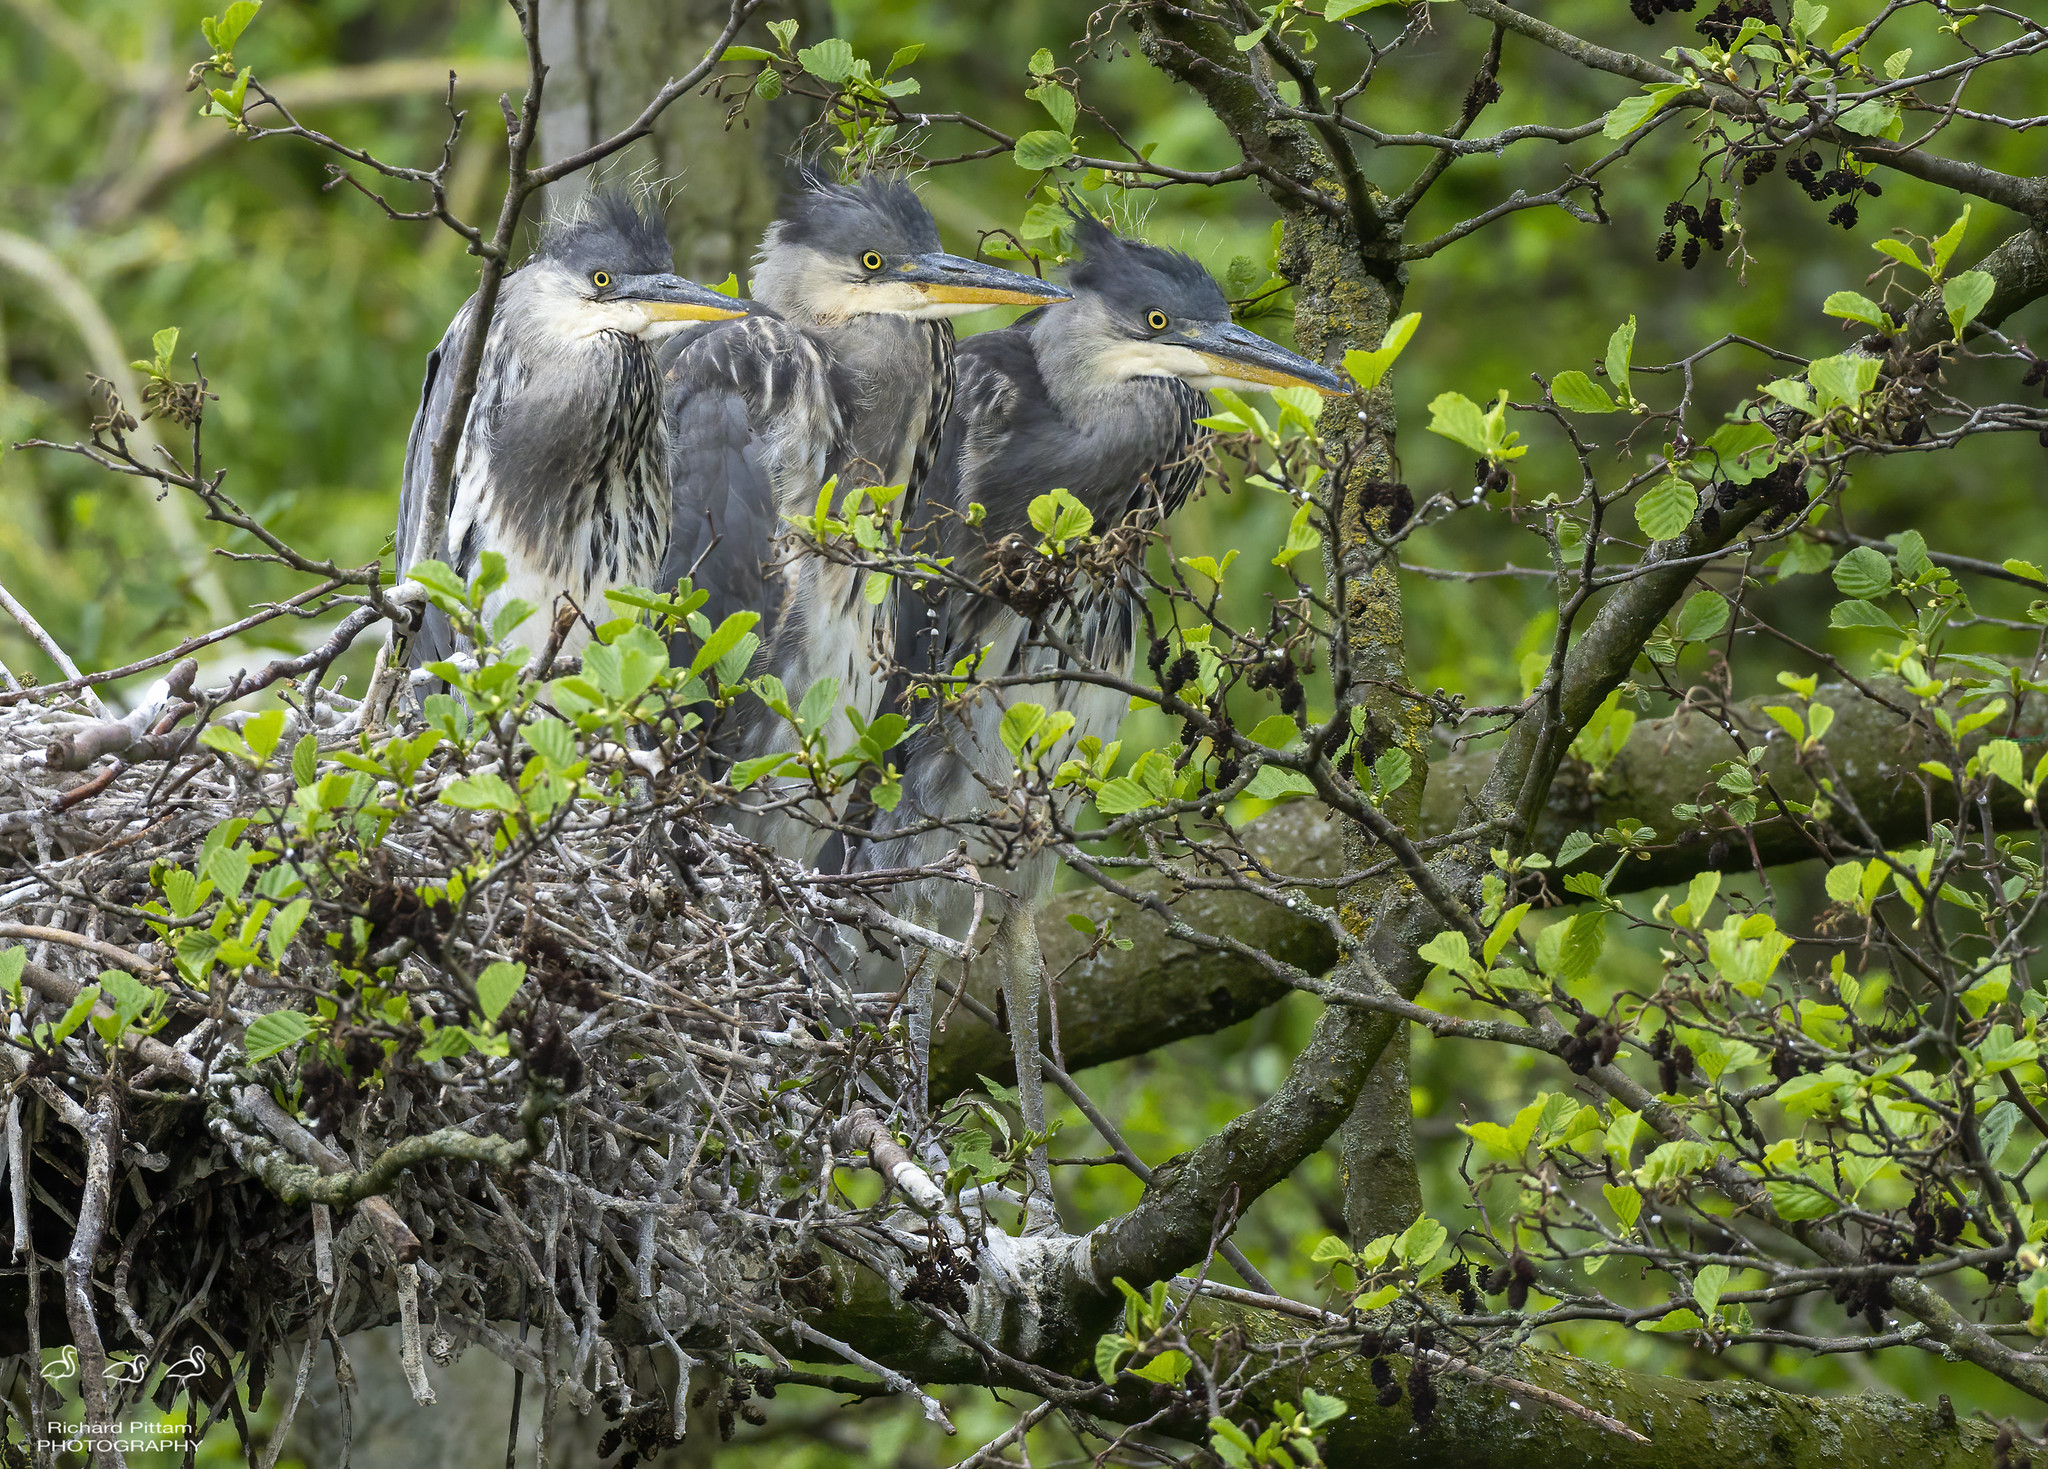 Grey Heron nest site - juveniles at the nest